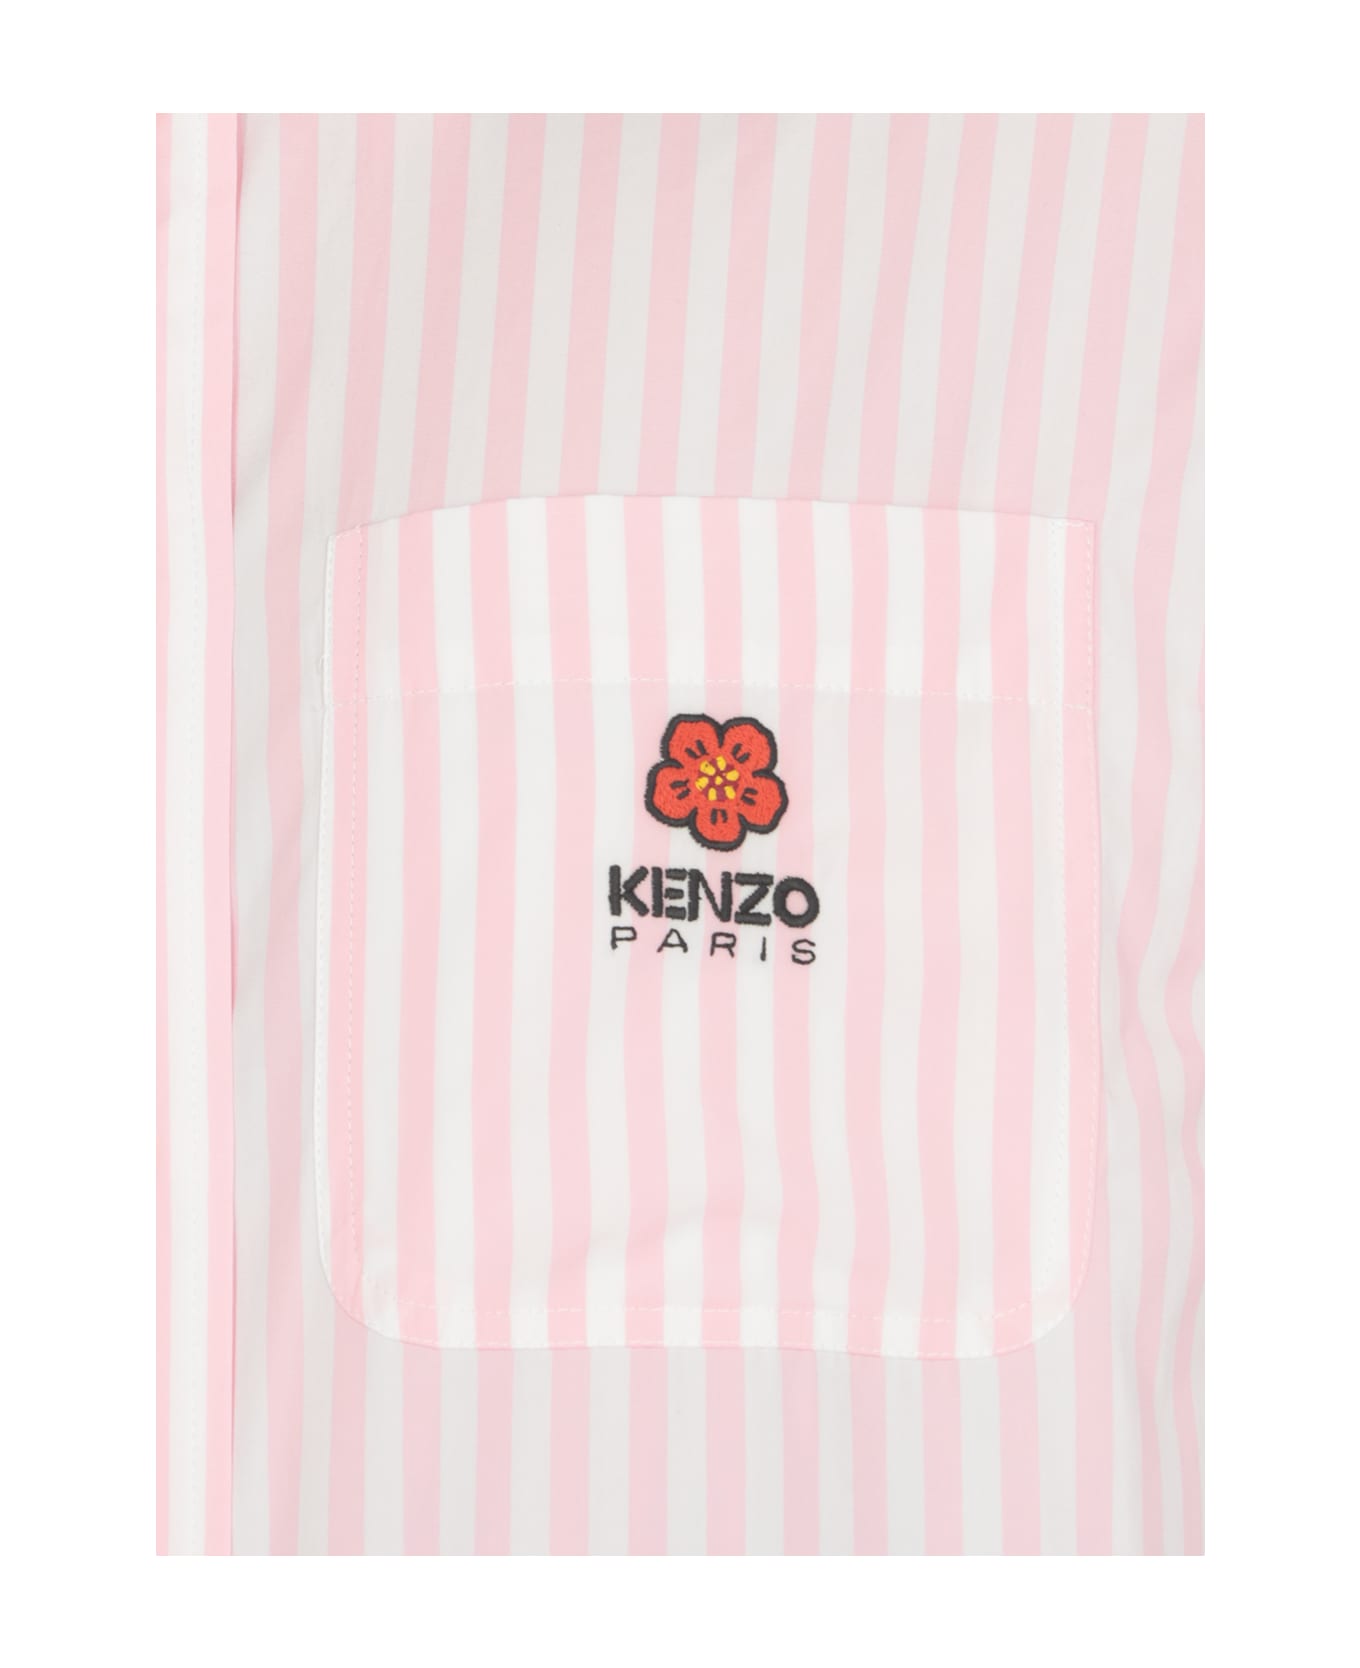 Kenzo Boke 2.0 Shirt - Faded Pink シャツ